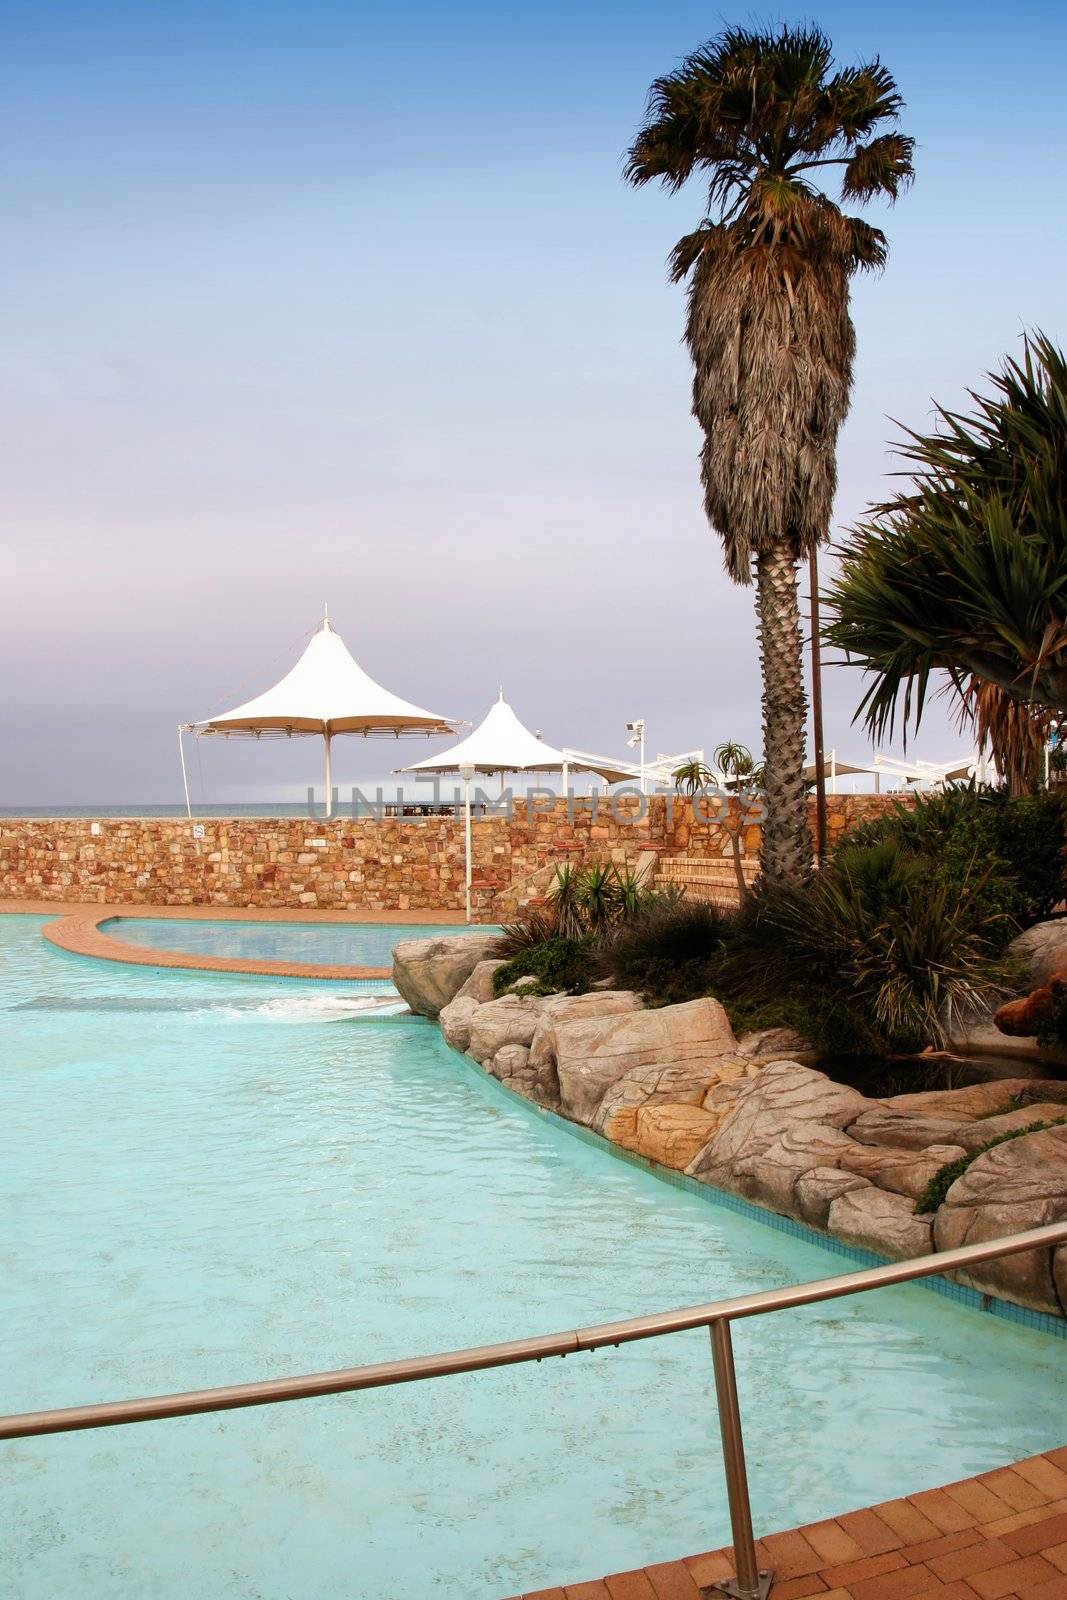 Swimming Pool Resort by fouroaks